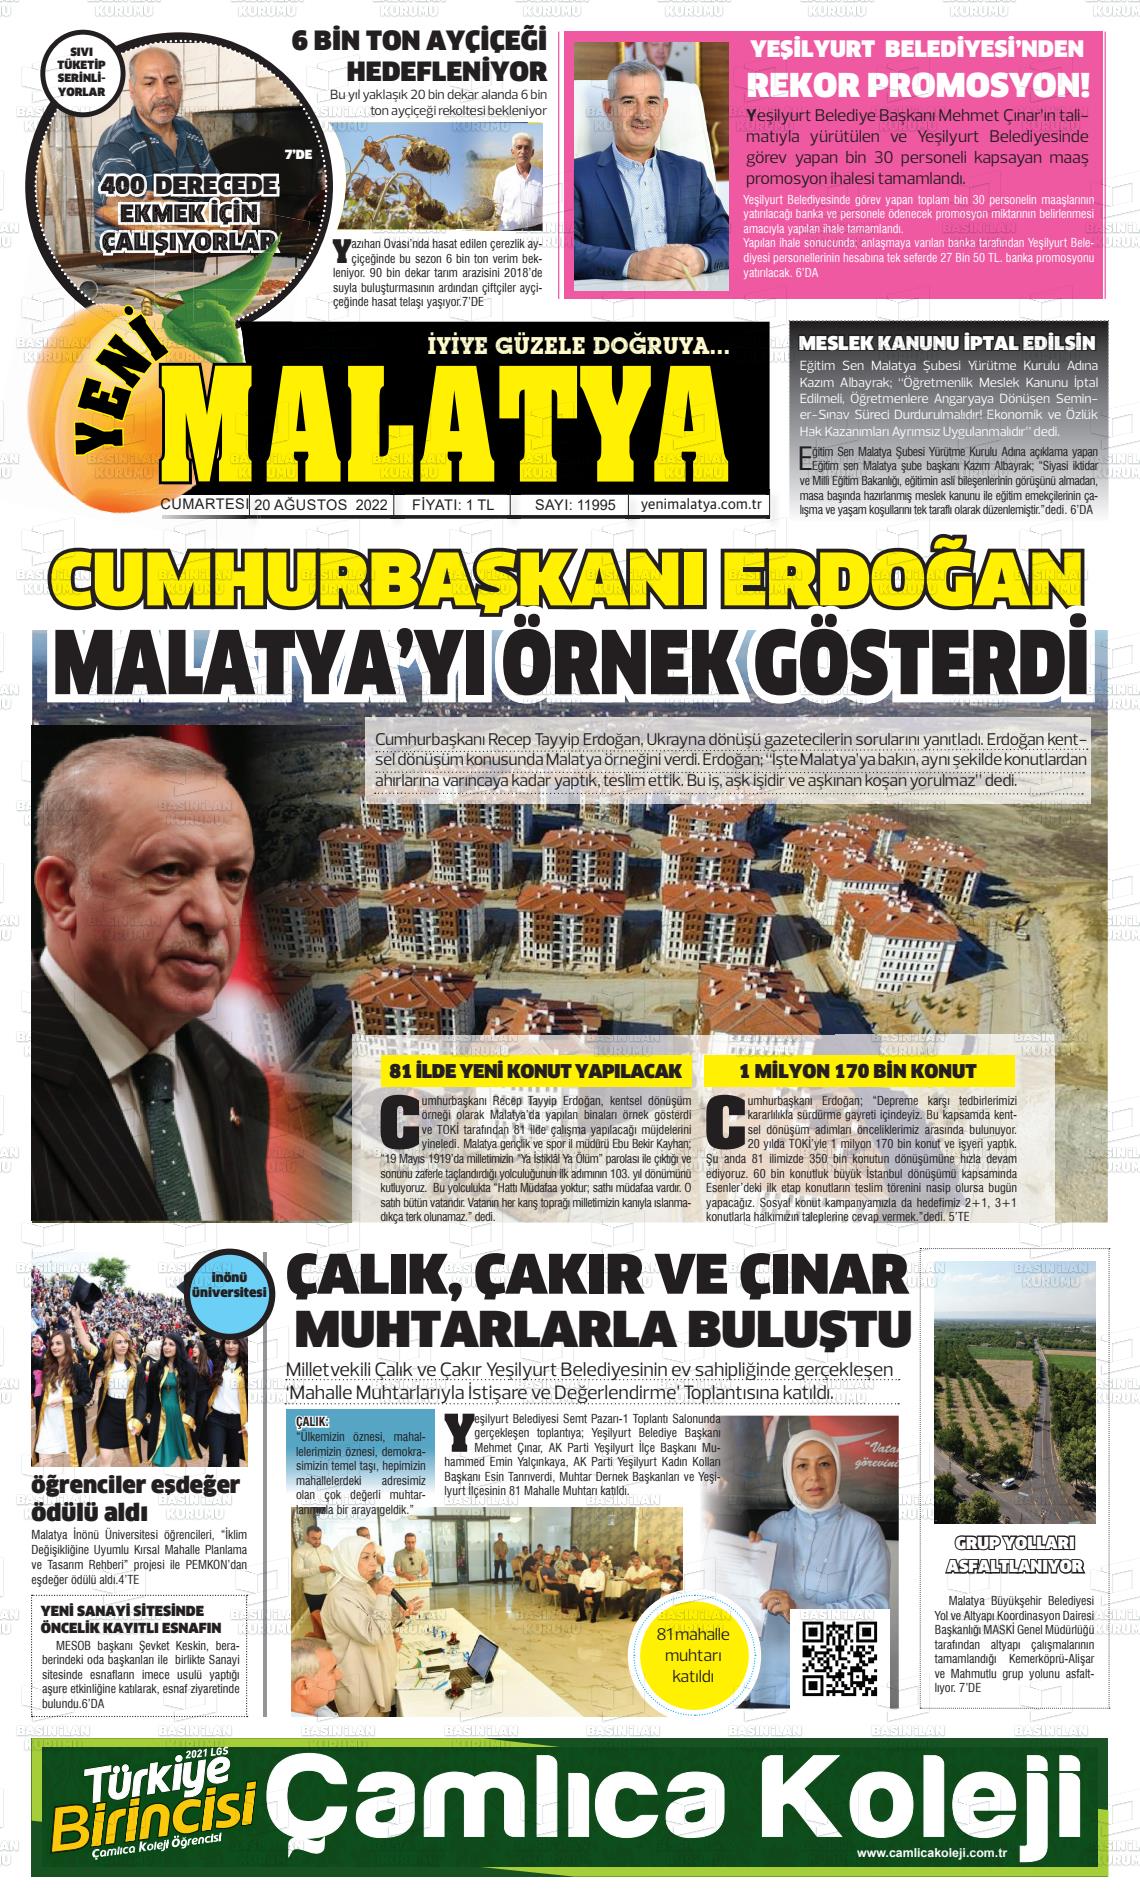 20 Ağustos 2022 Yeni Malatya Gazete Manşeti